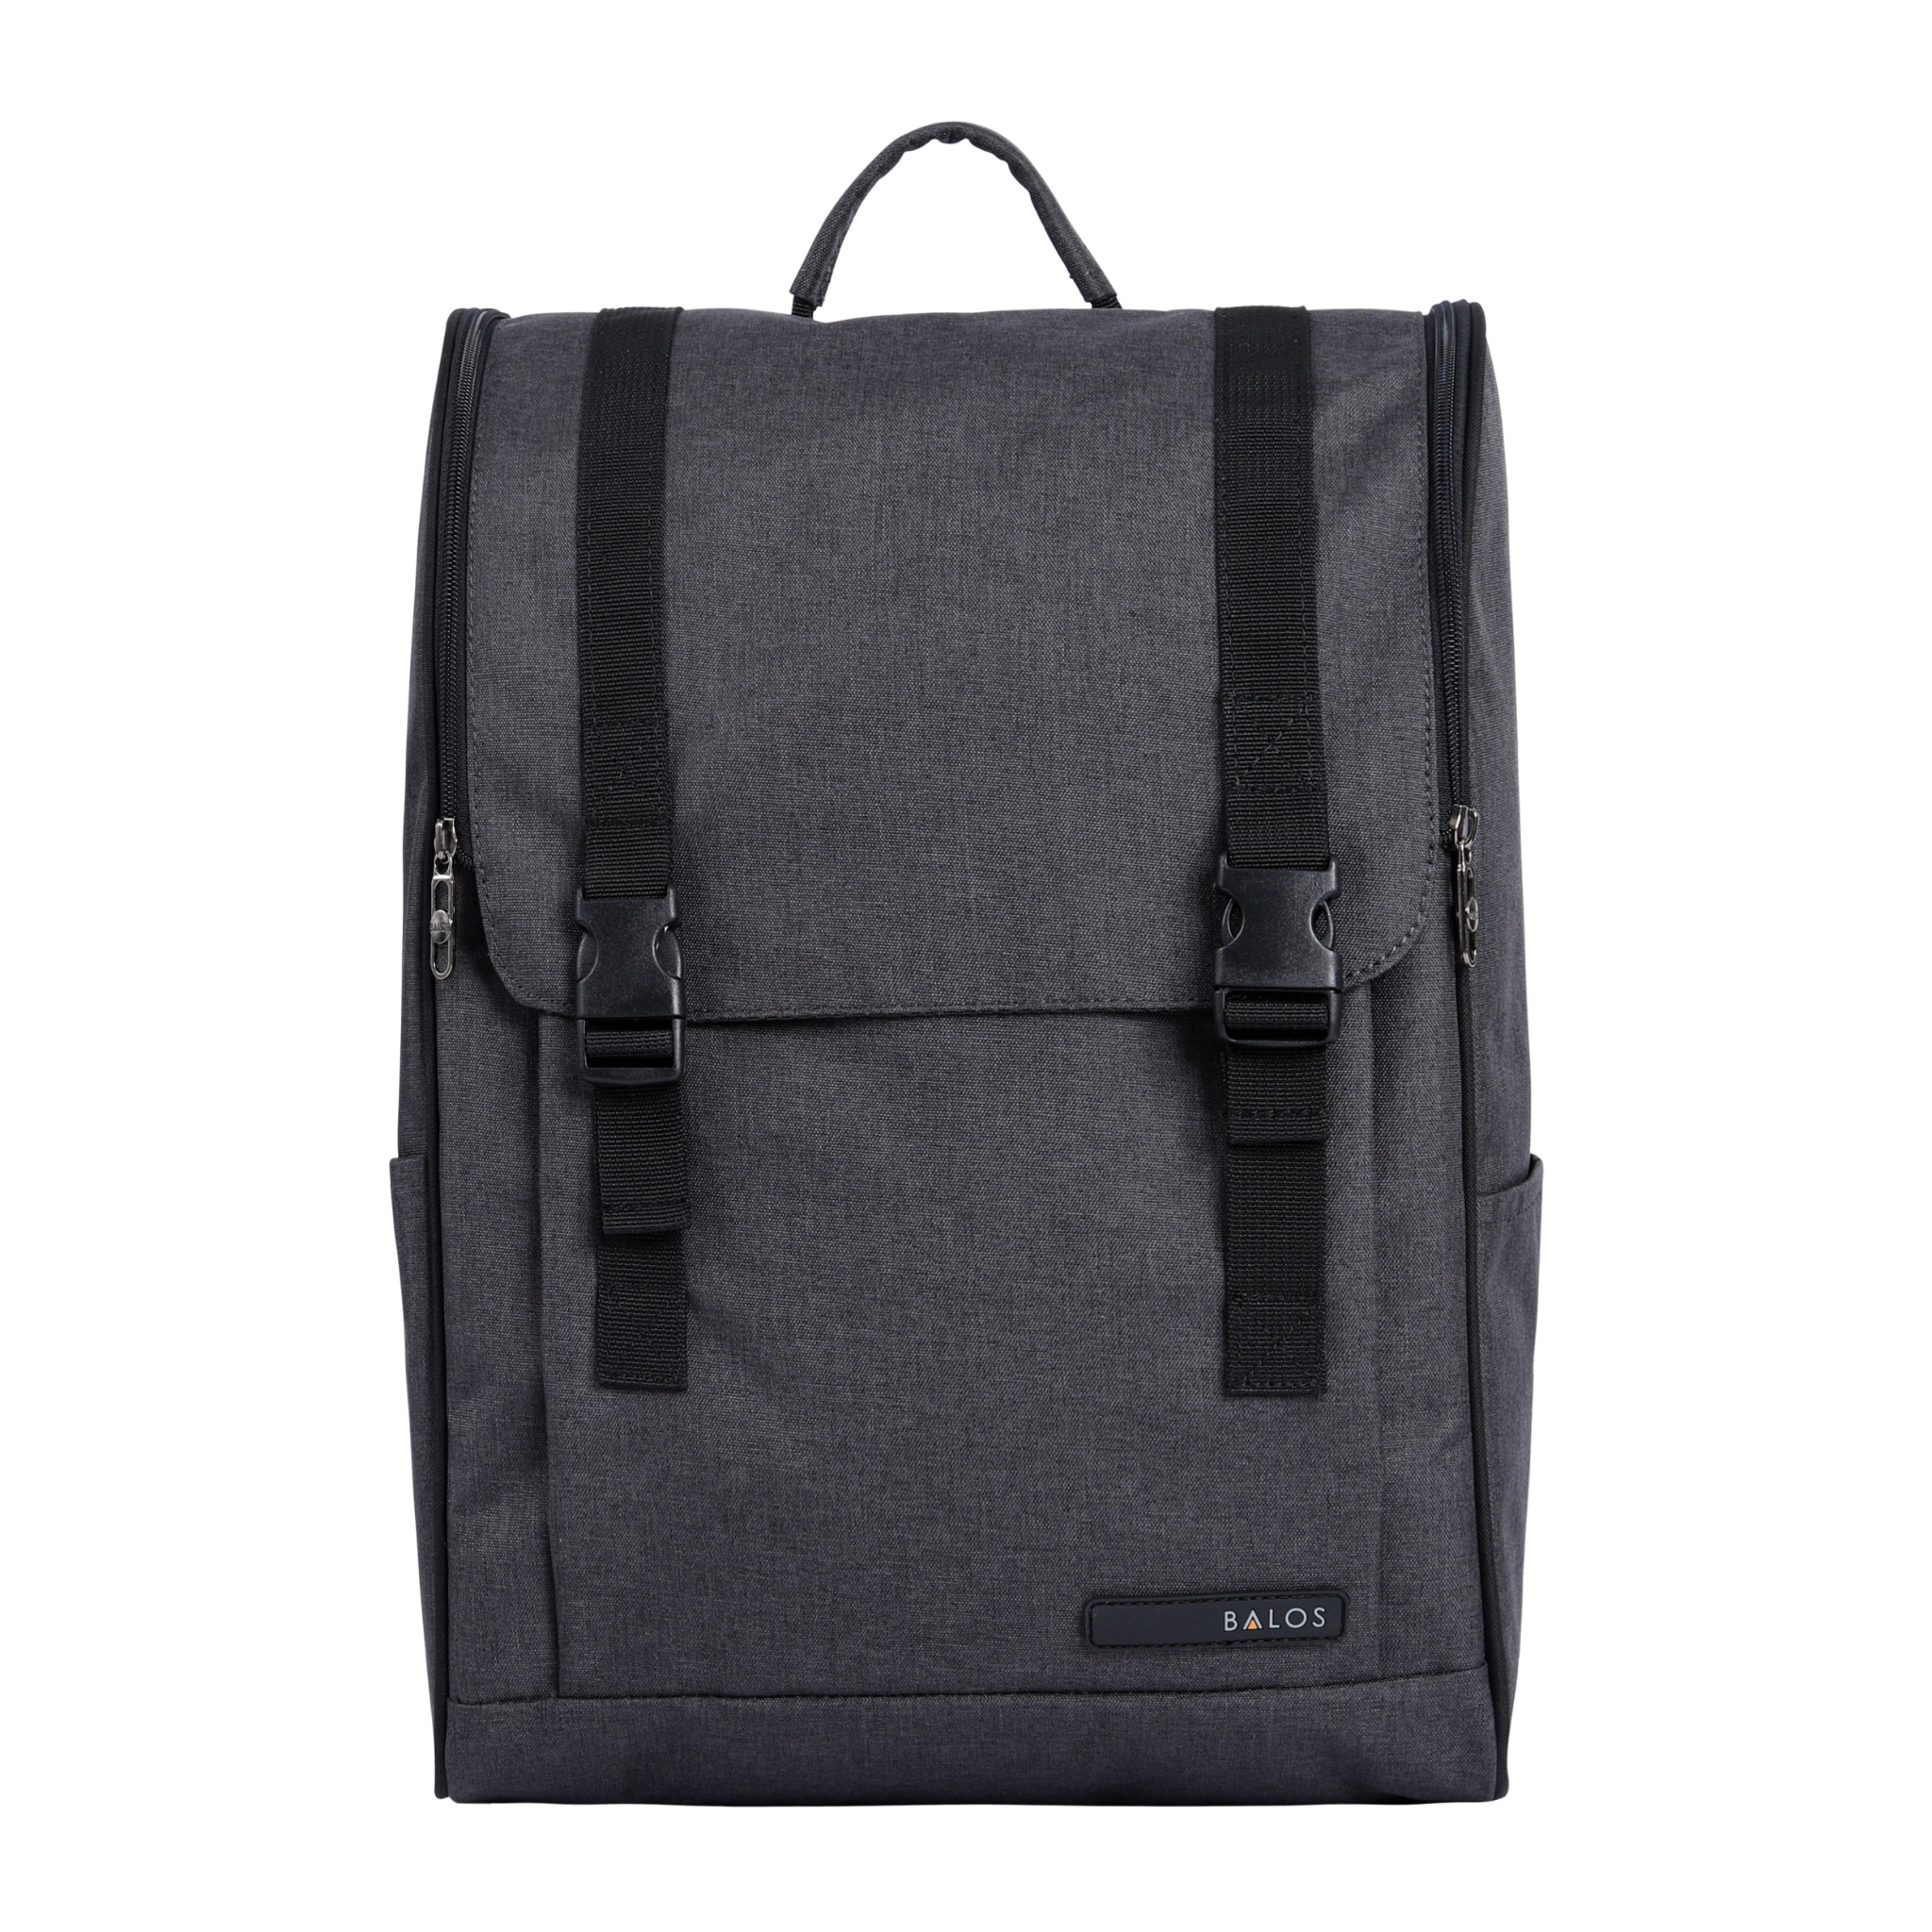  Balos FORWAY D.Grey Backpack - Balo Laptop Thời Trang 